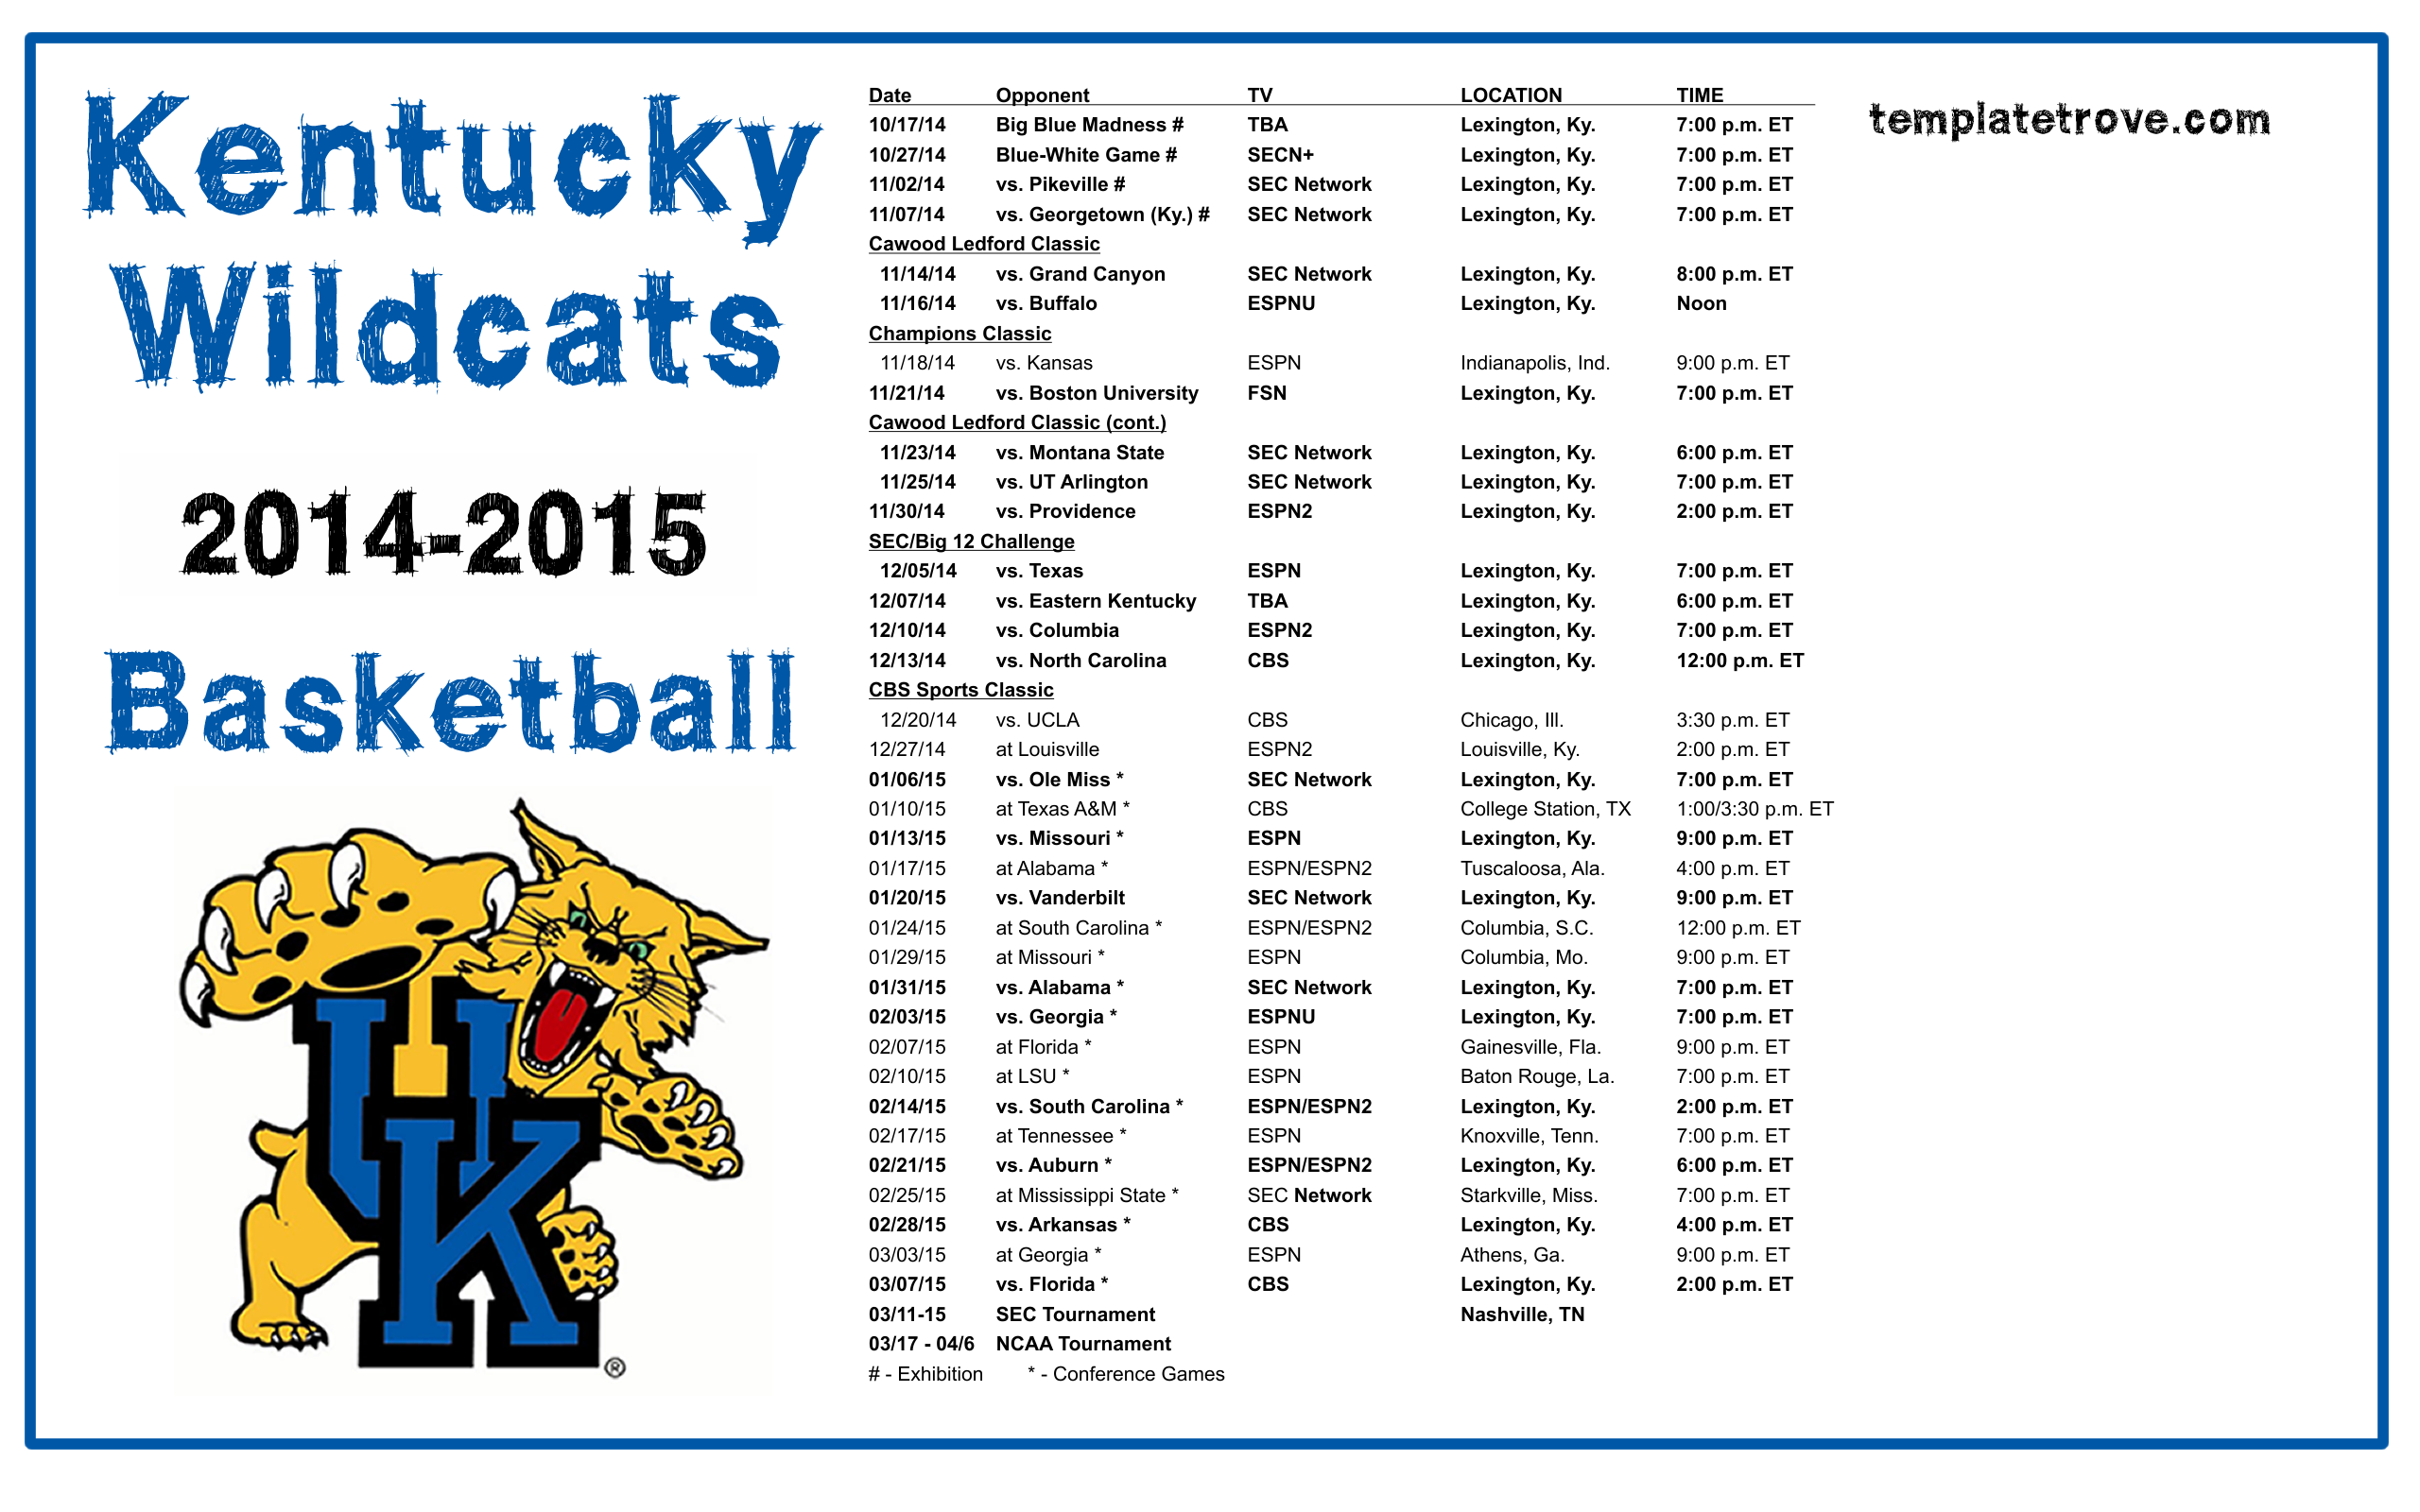 University of Kentucky 2014 2015 Basketball Schedule 2560x1600 PNGpng 2560x1600